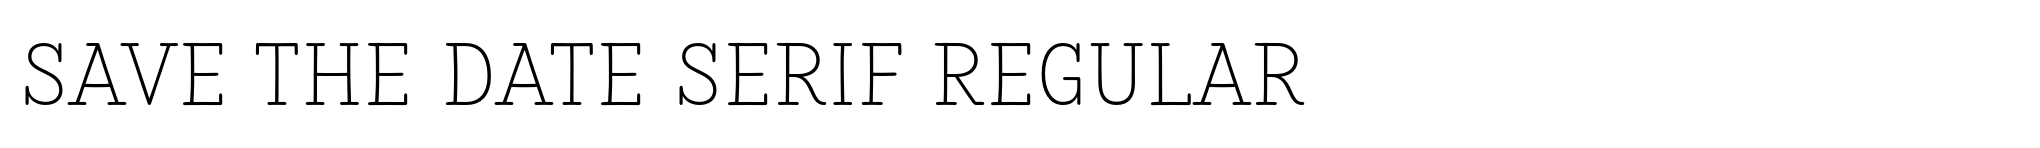 Save The Date Serif Regular image